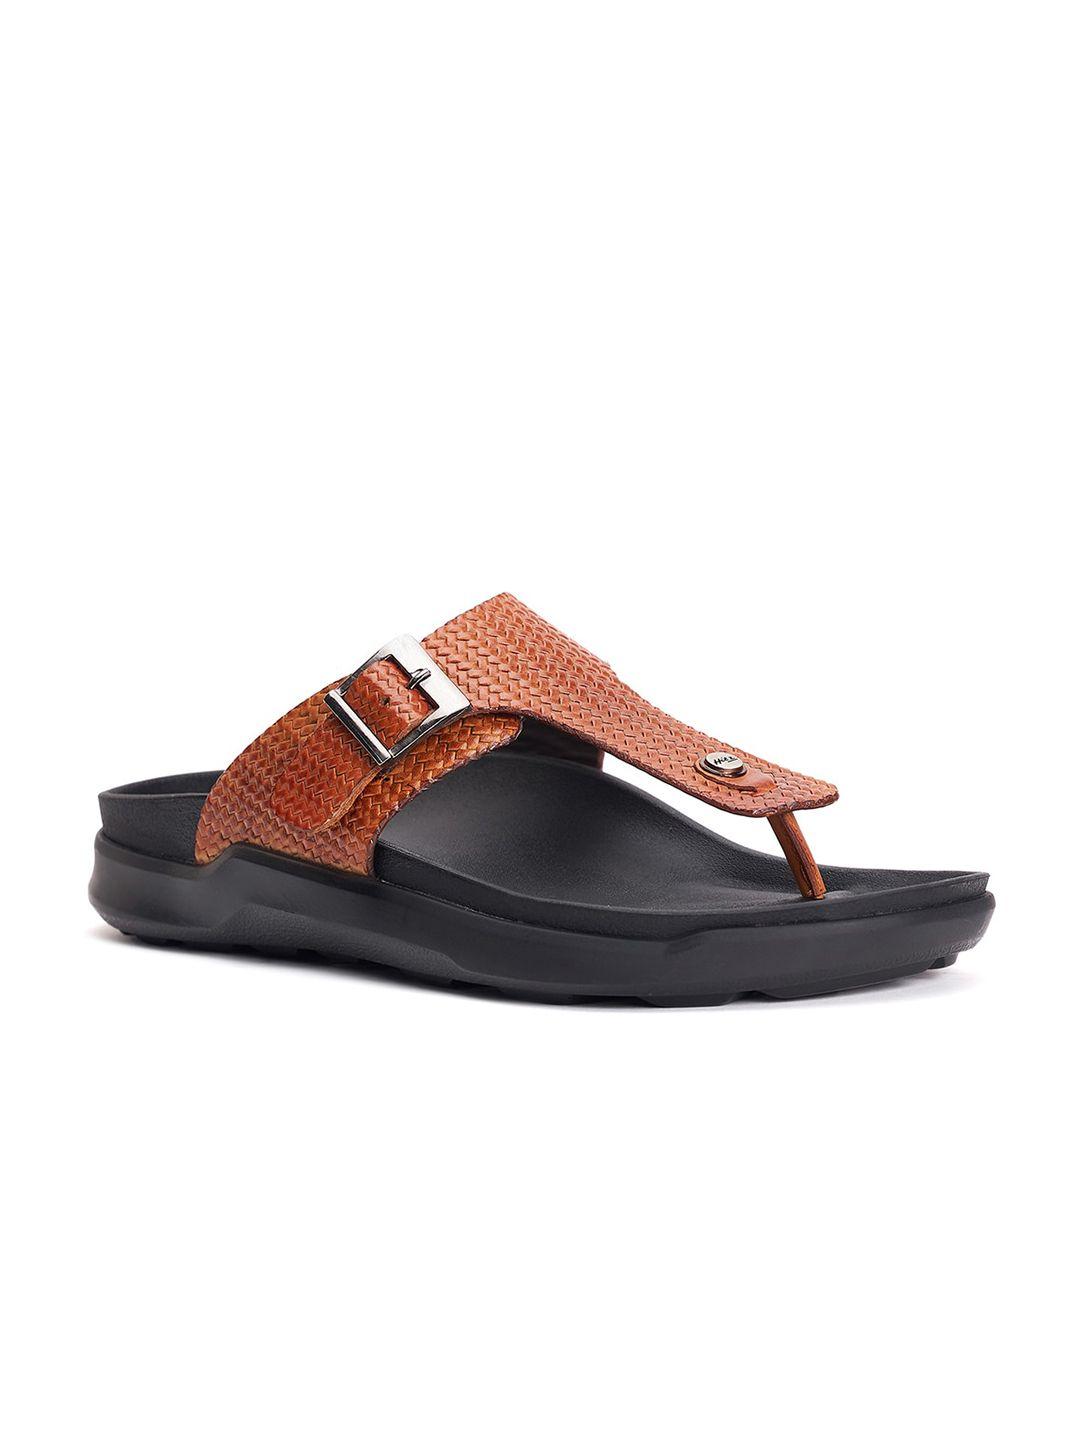 Hitz Men Textured Leather Comfort Sandals With Buckle Detail